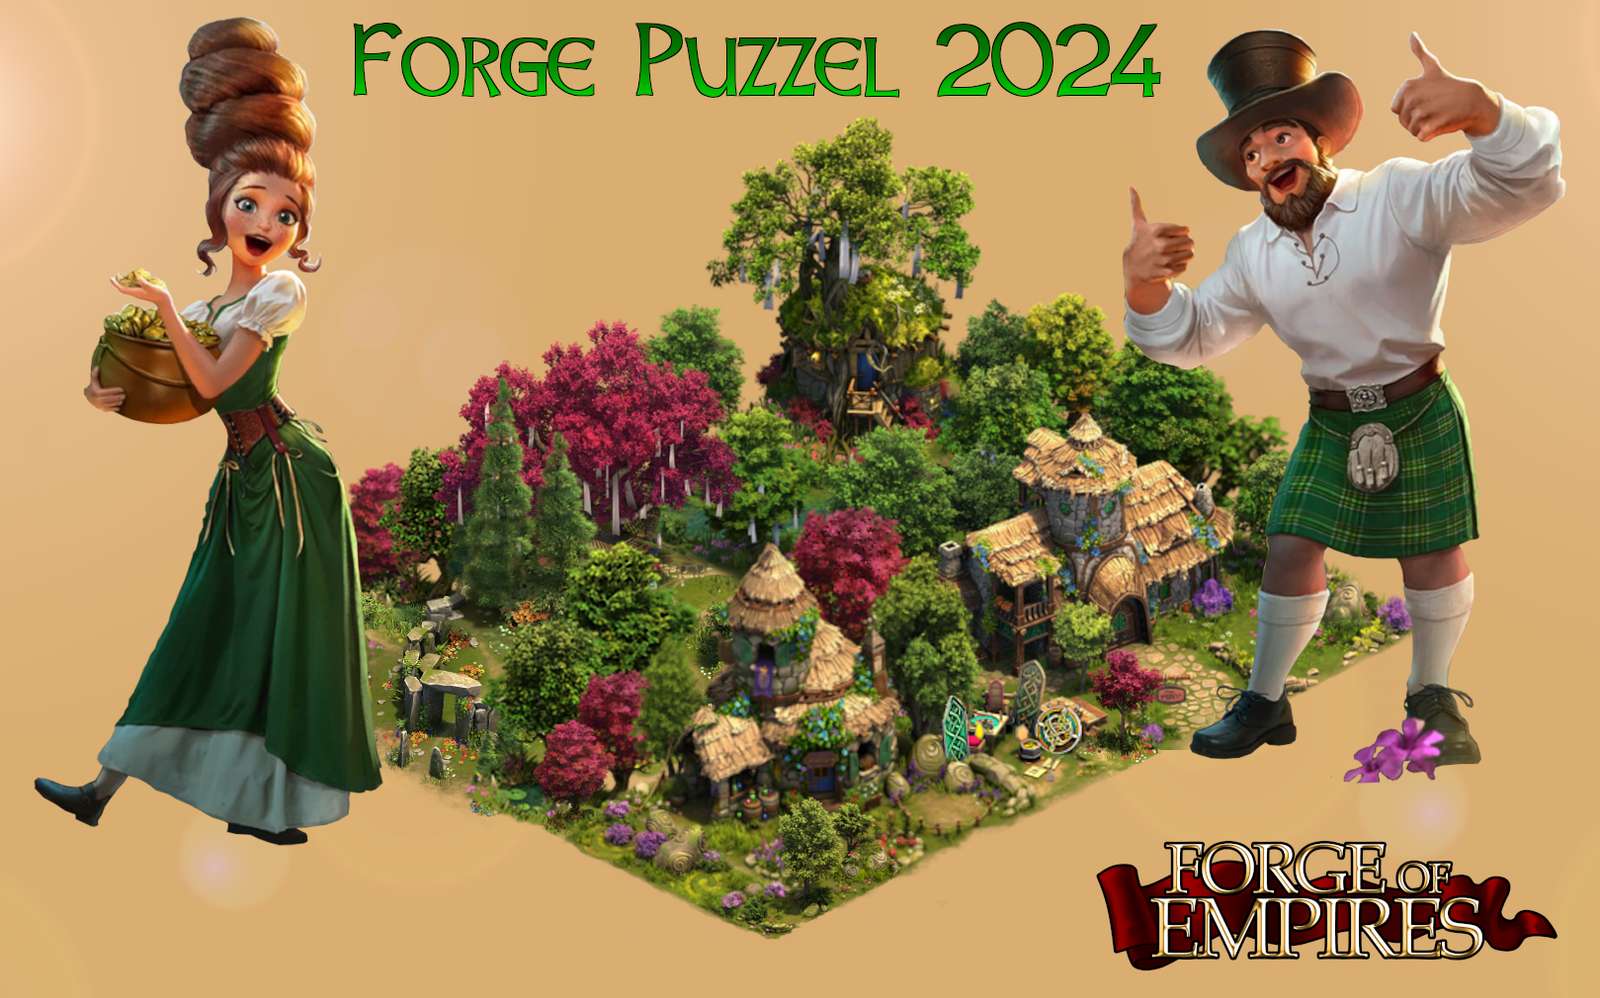 St. Patricks day 2024 online puzzle